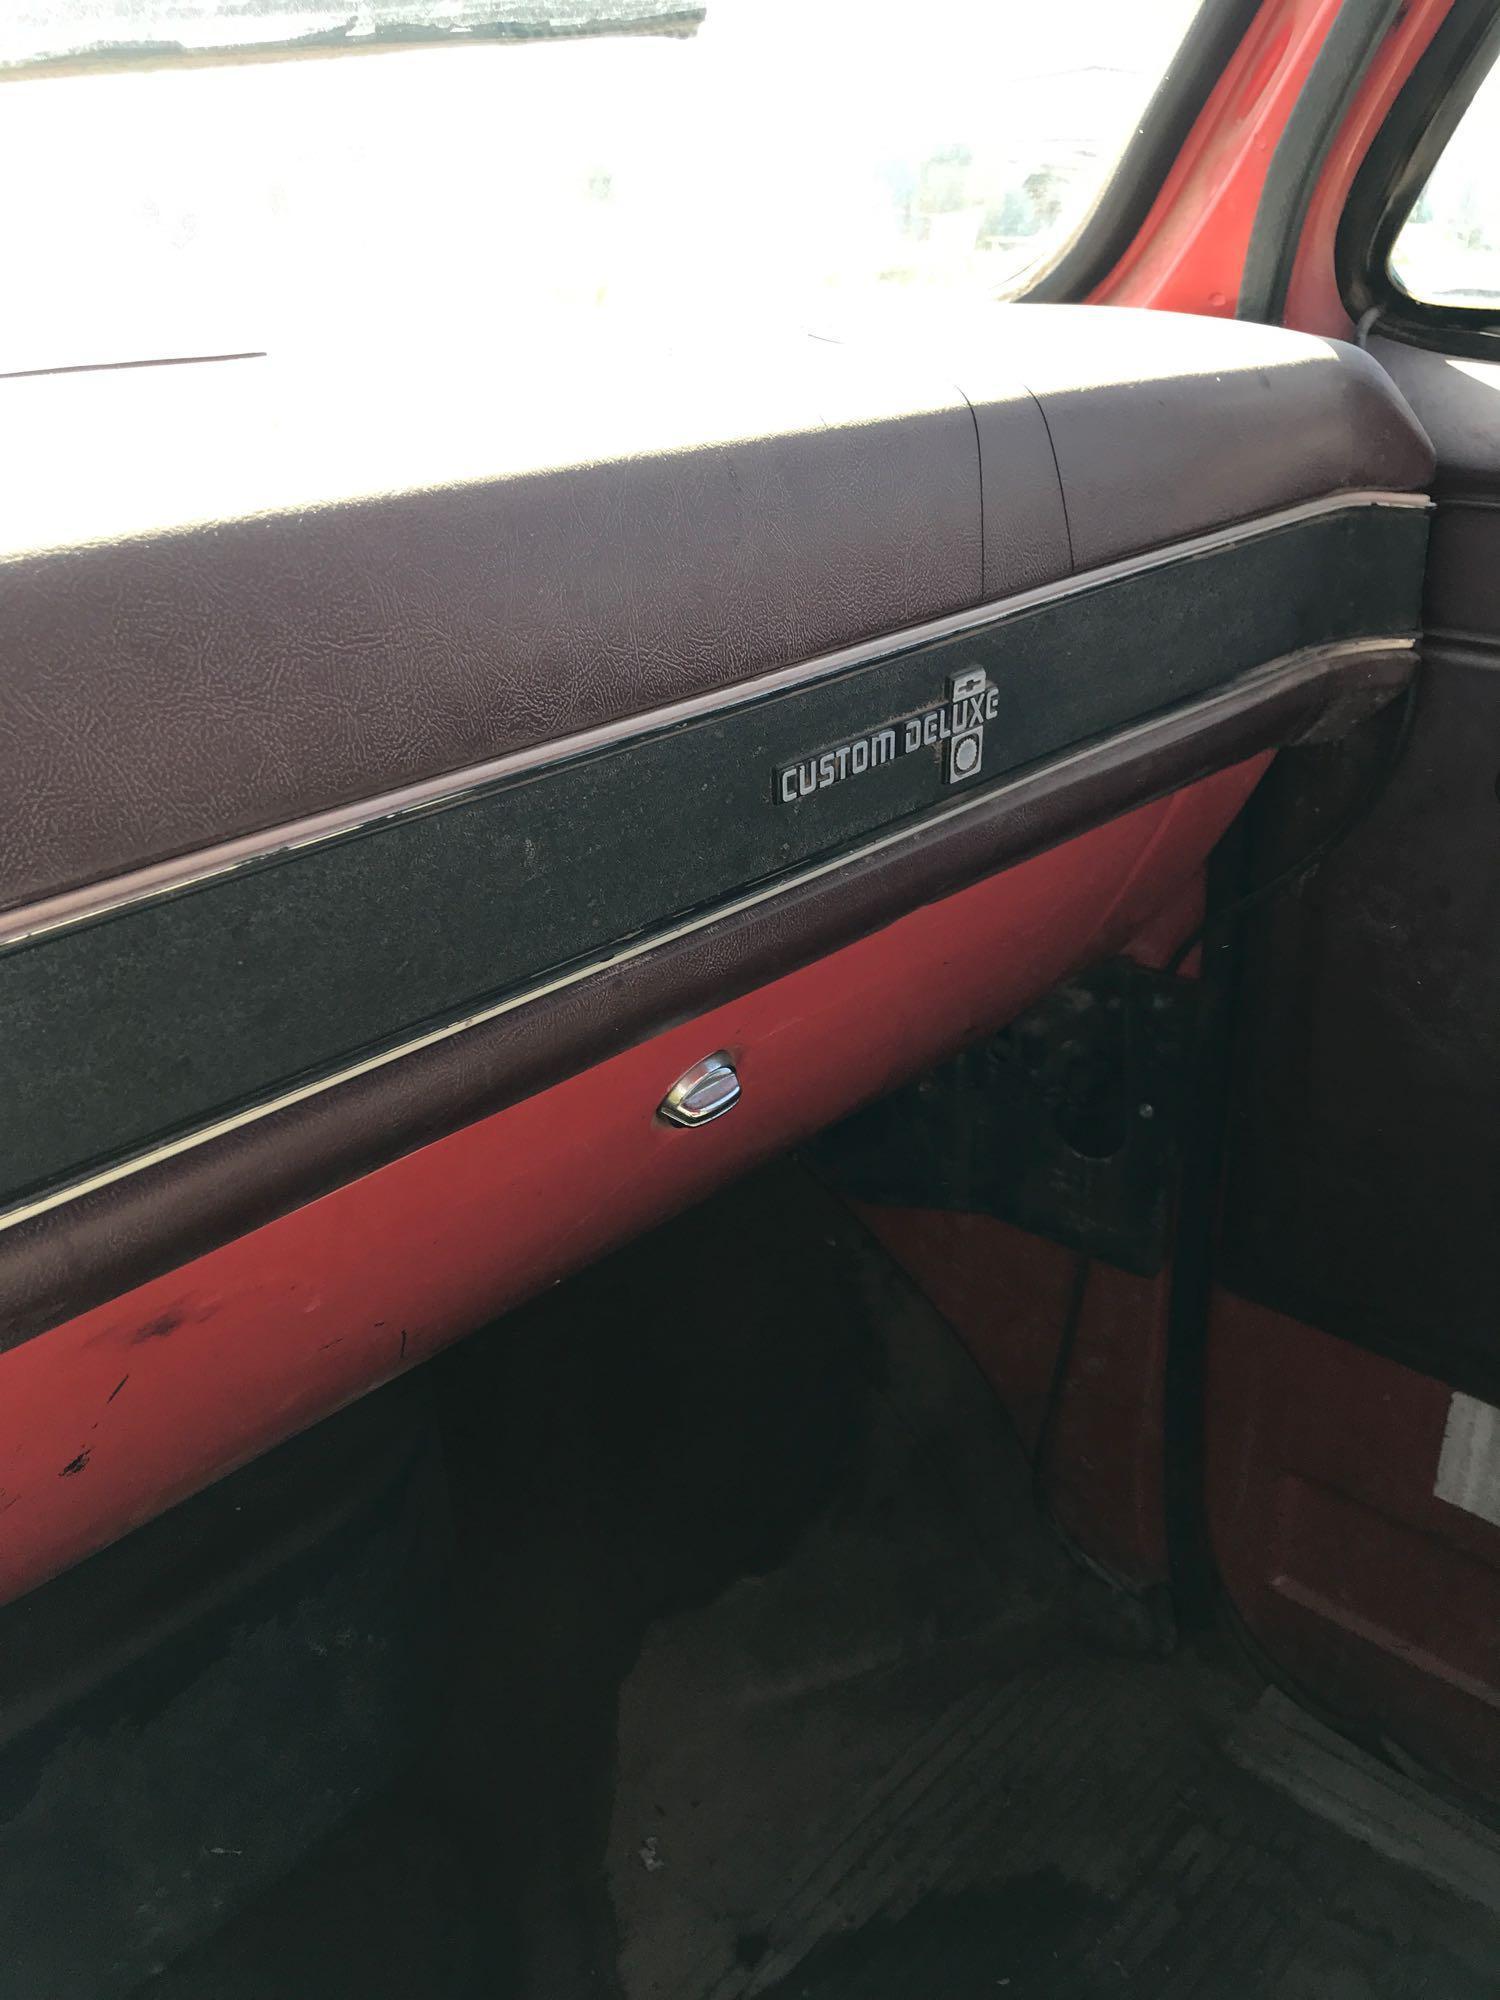 1984 Chevrolet C70 KodiakTruck, VIN # 1GBL7D1Y2EV140571